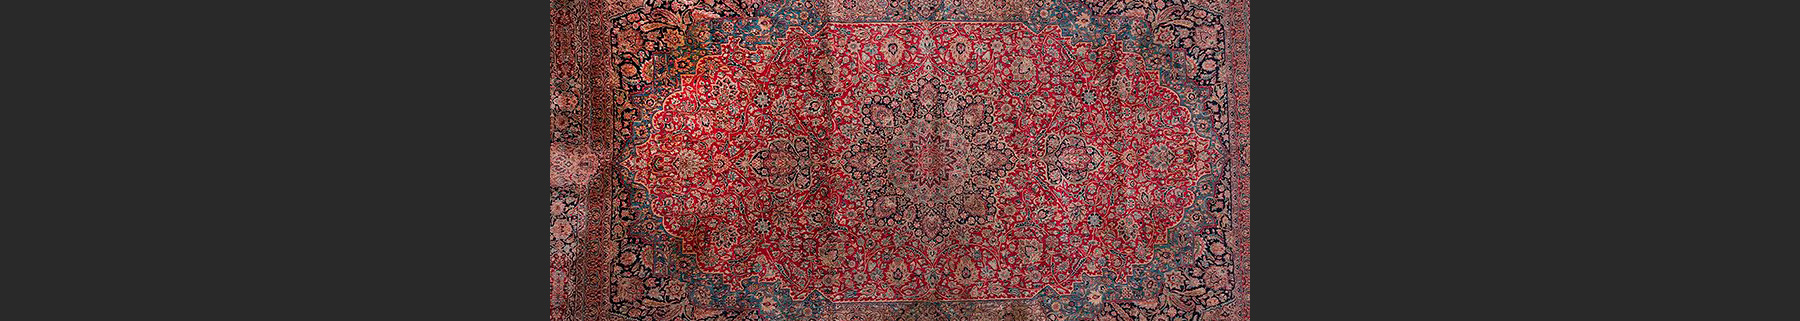 Ansorena vende por 6.500 euros una interesante alfombra Kashan